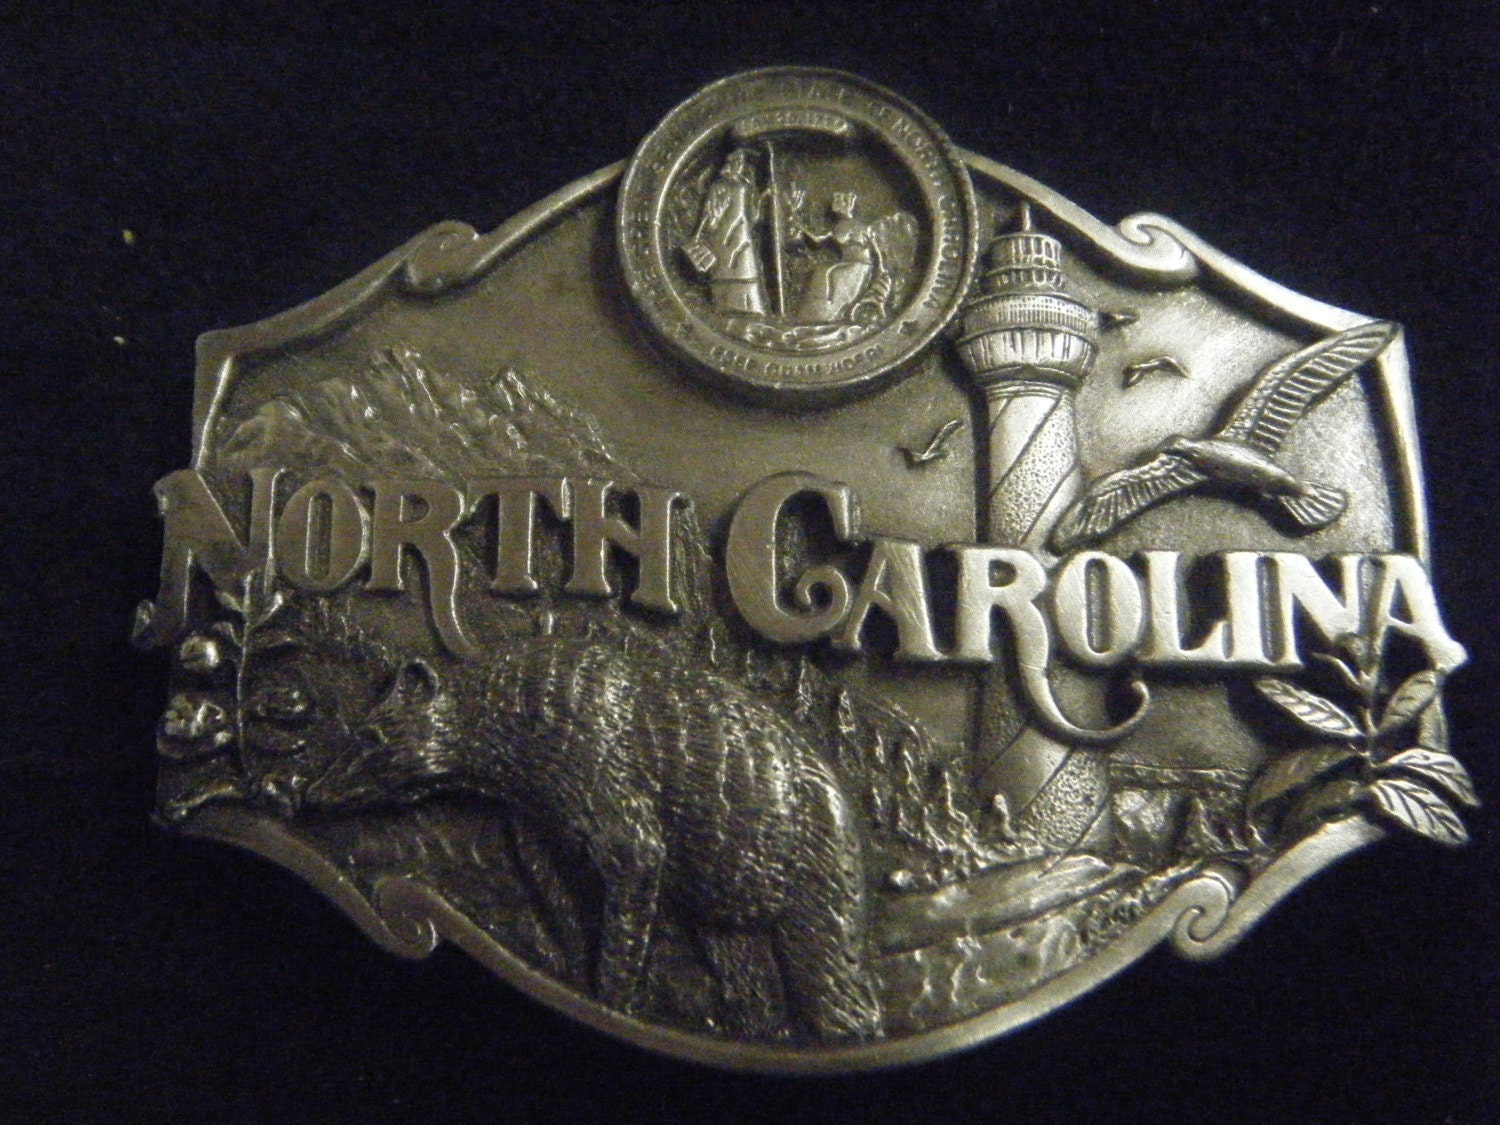 Vintage North Carolina Belt Buckle by BeltBuckleQueen on Etsy